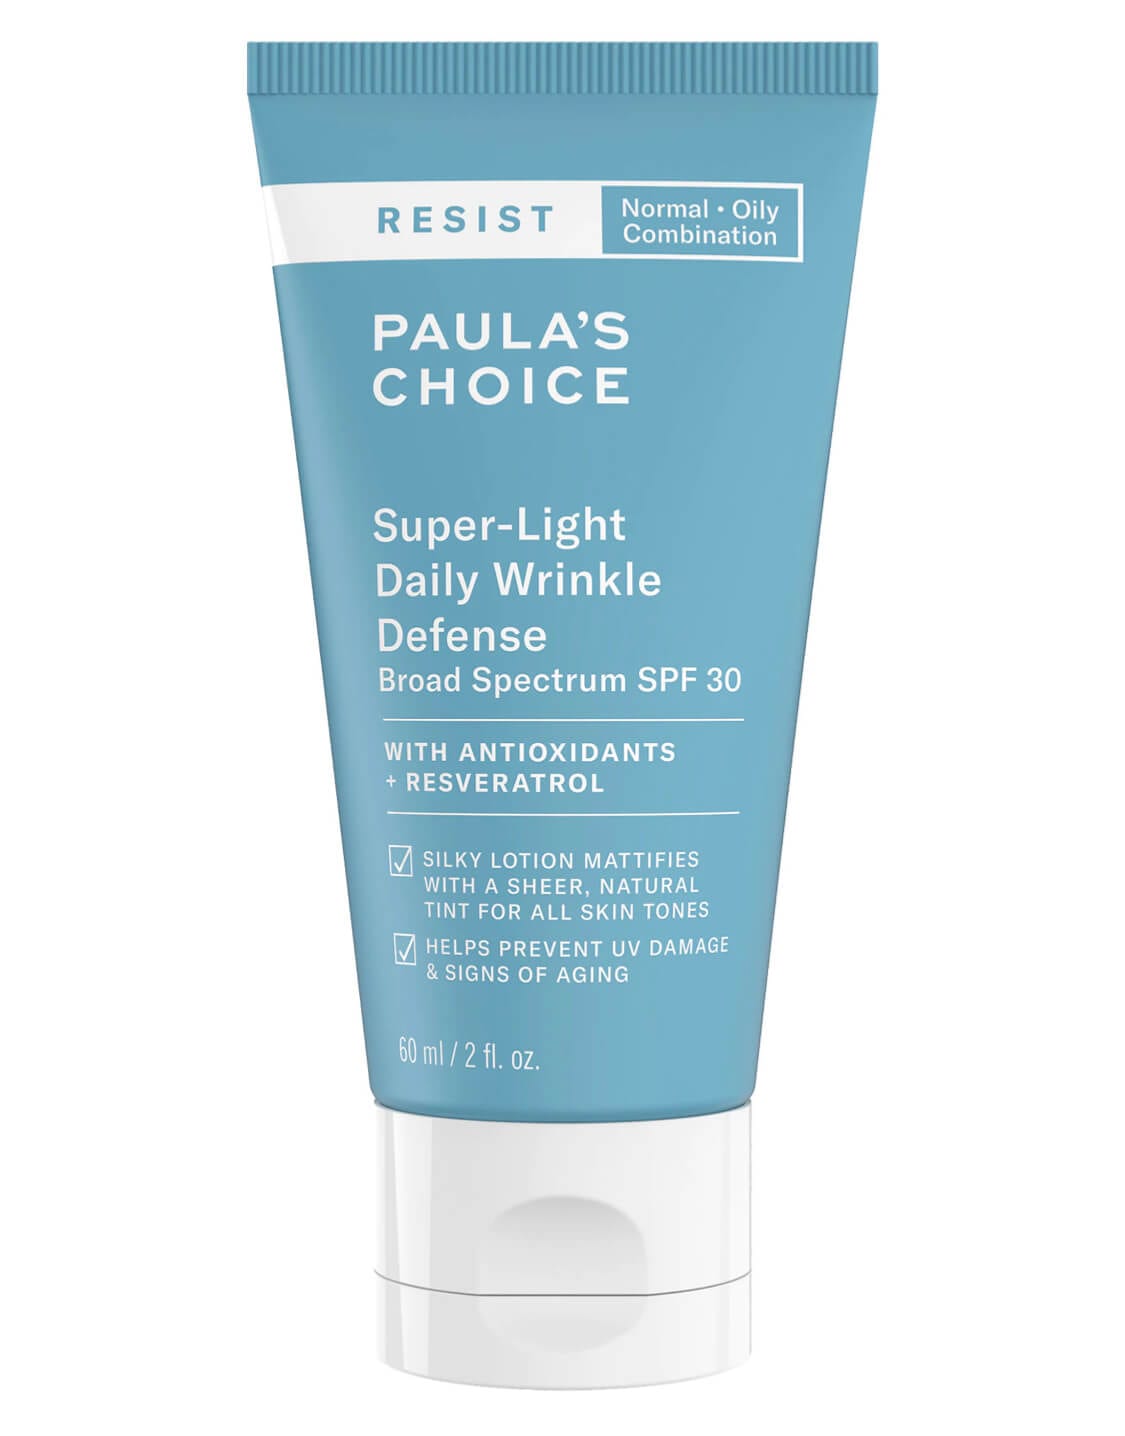 RESIST Super-Light Daily Wrinkle Defense SPF 30 by Paula's Choice